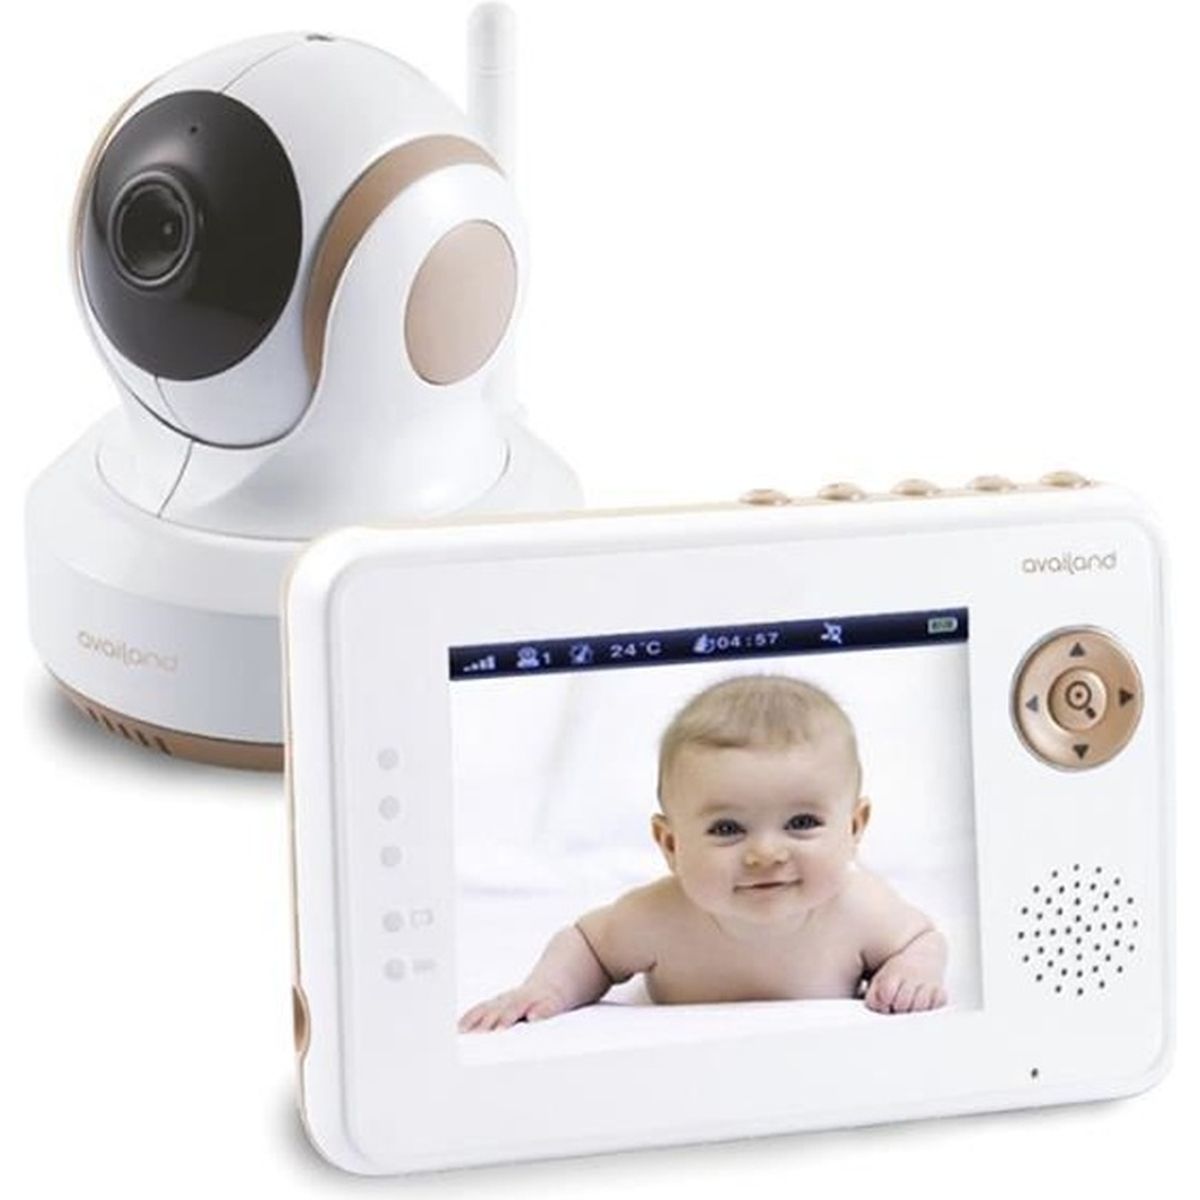 Babyphone avec cam/éra motoris/ée Beige//blanc Availand Follow Baby